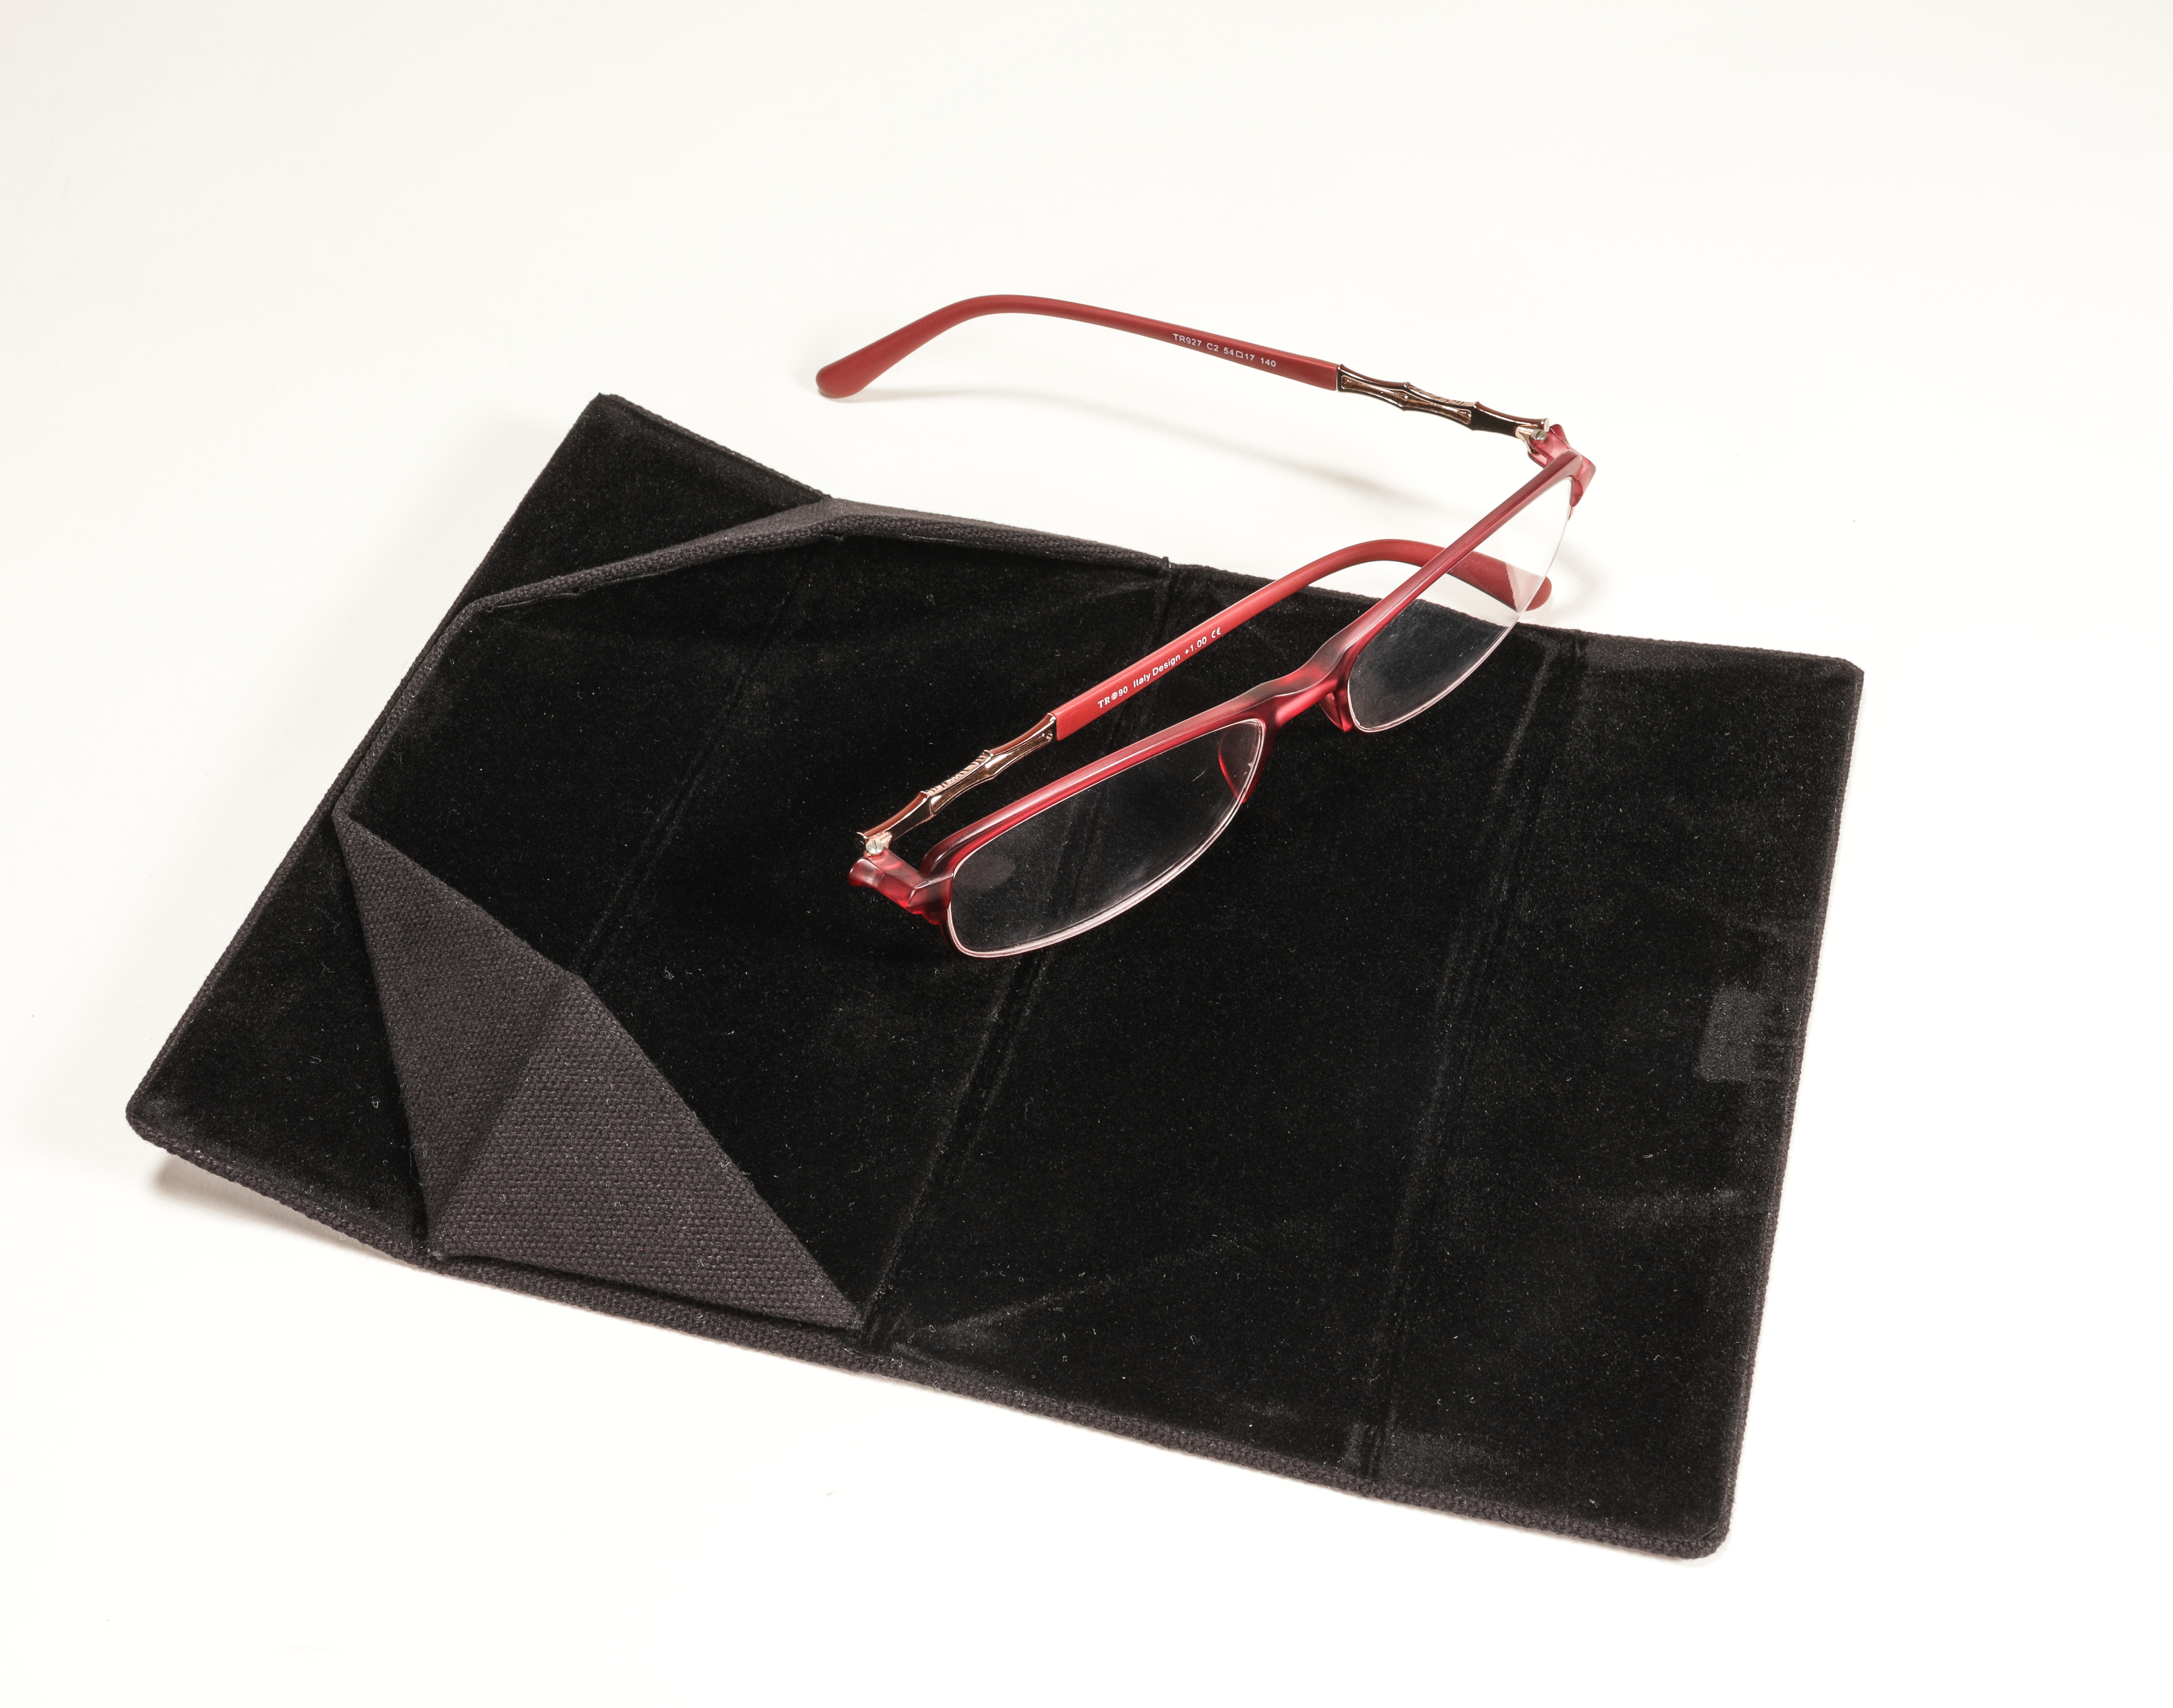 2021 Sunglasses, Black, Triangular, Handmade Case